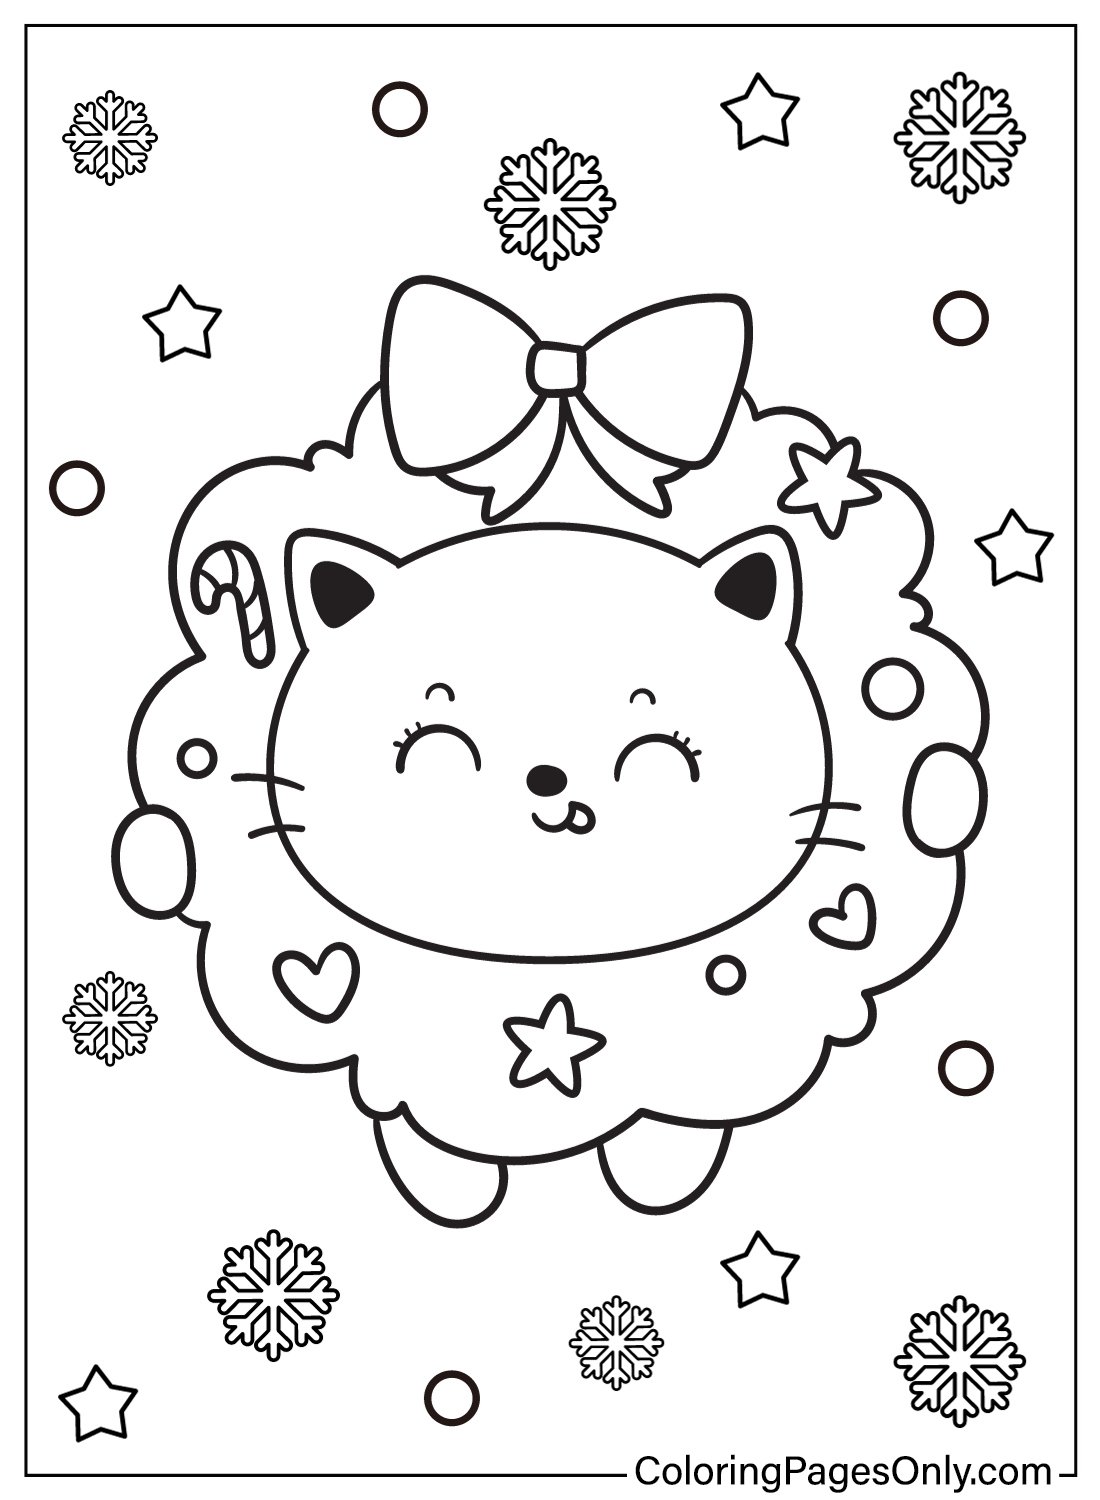 Desenhos para colorir de gato com guirlanda de Natal